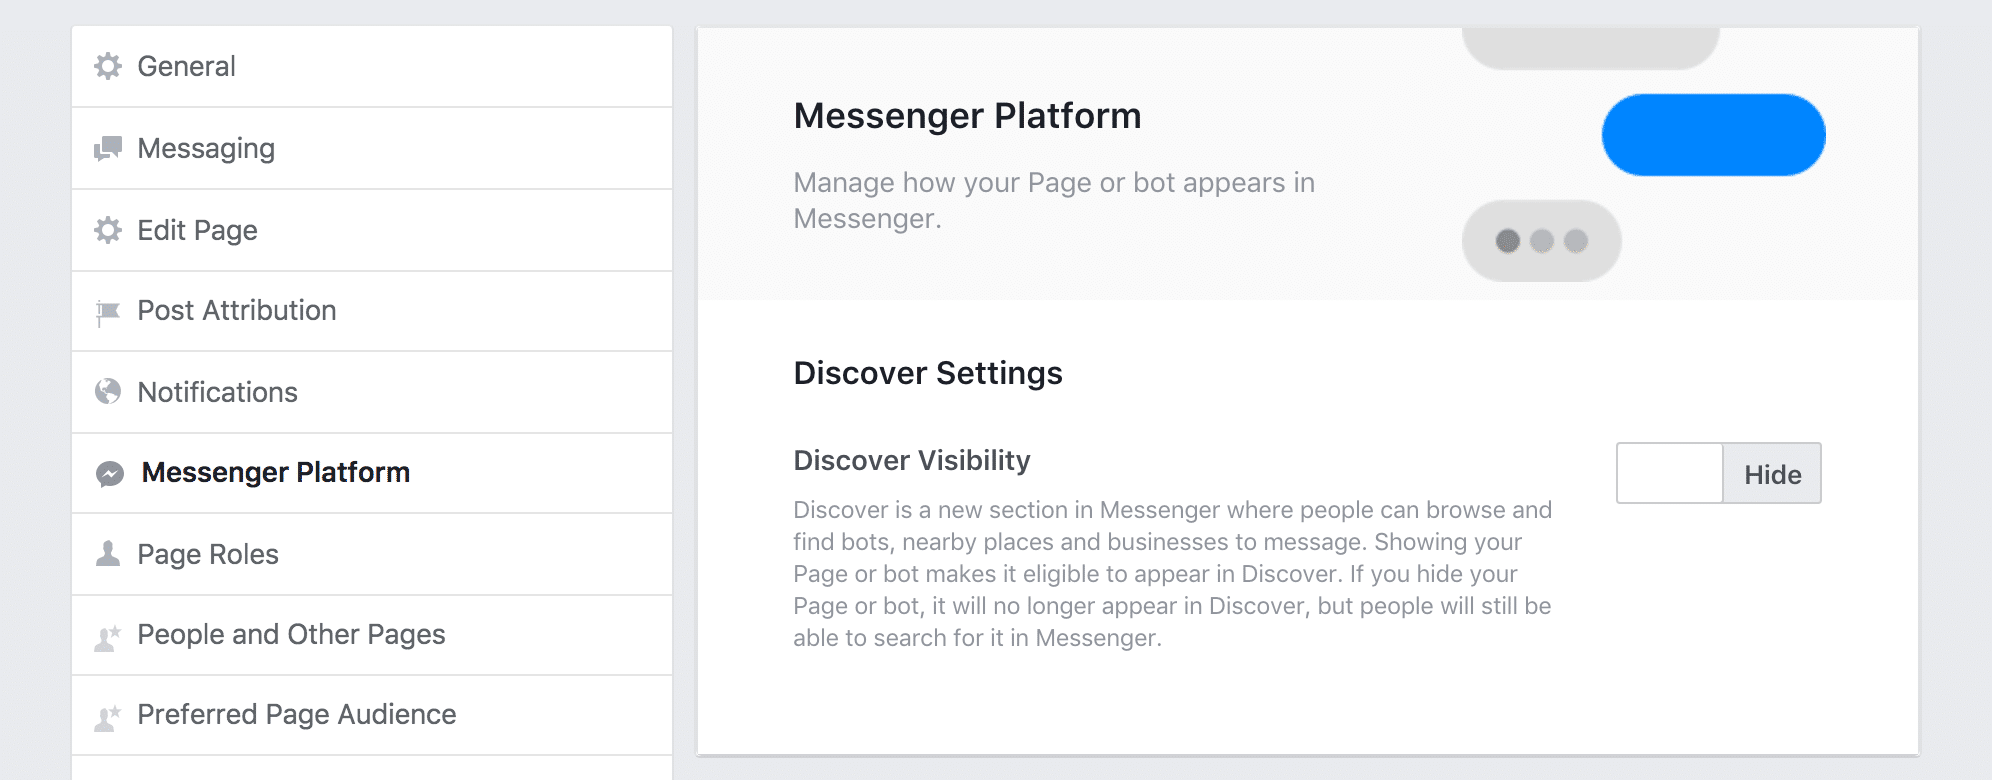 facebook messenger settings 2017